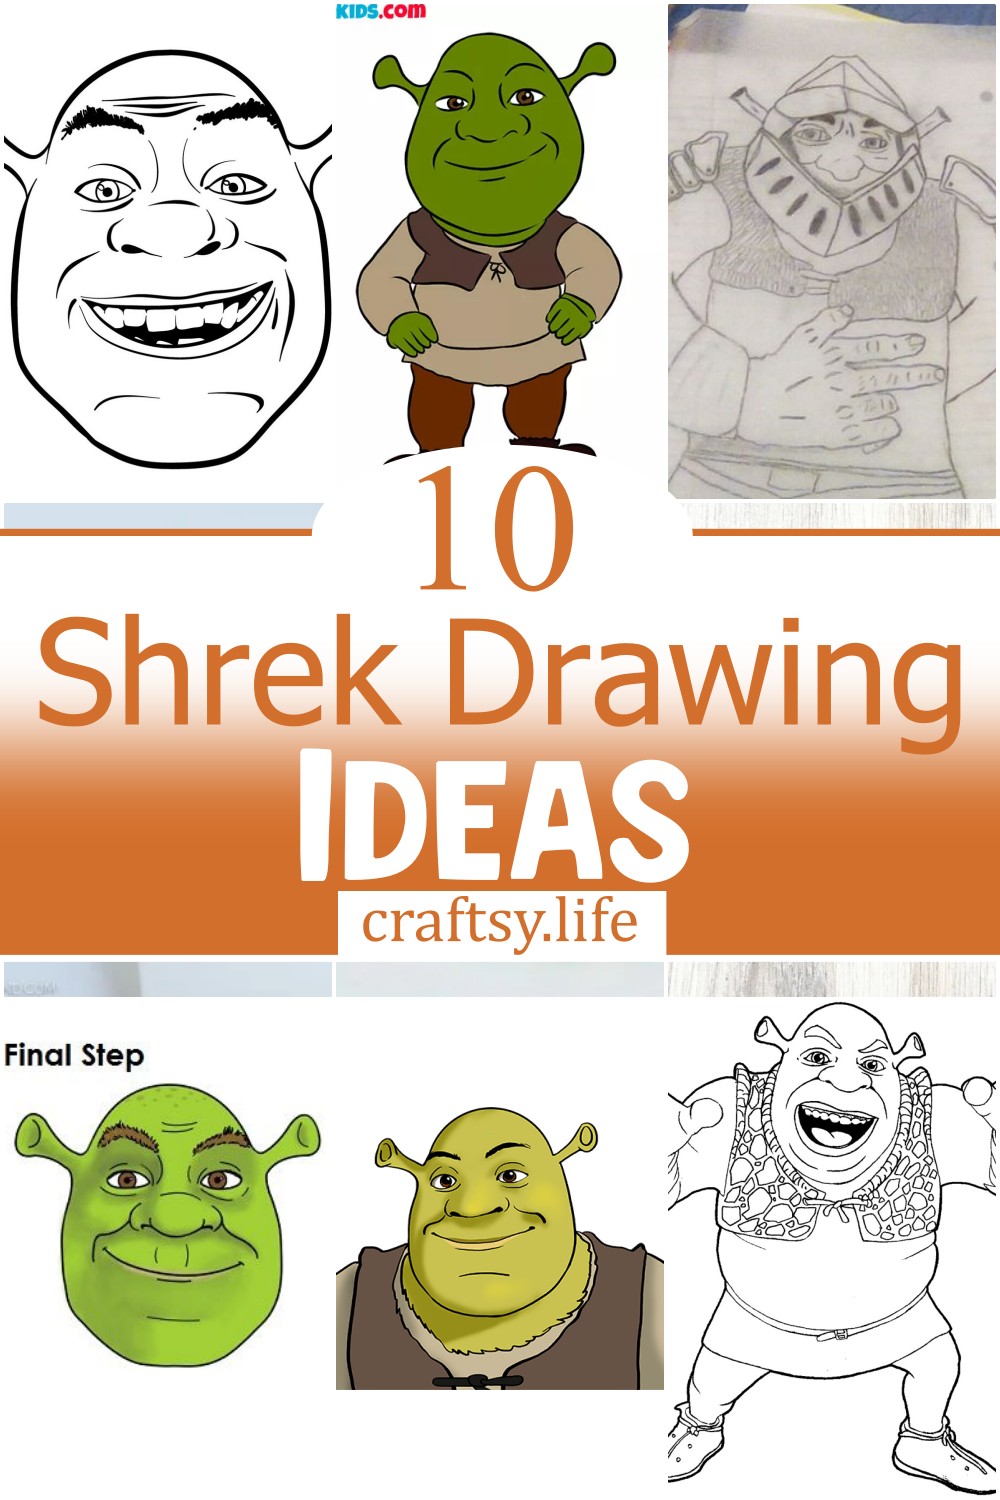 10 Shrek Drawing Ideas